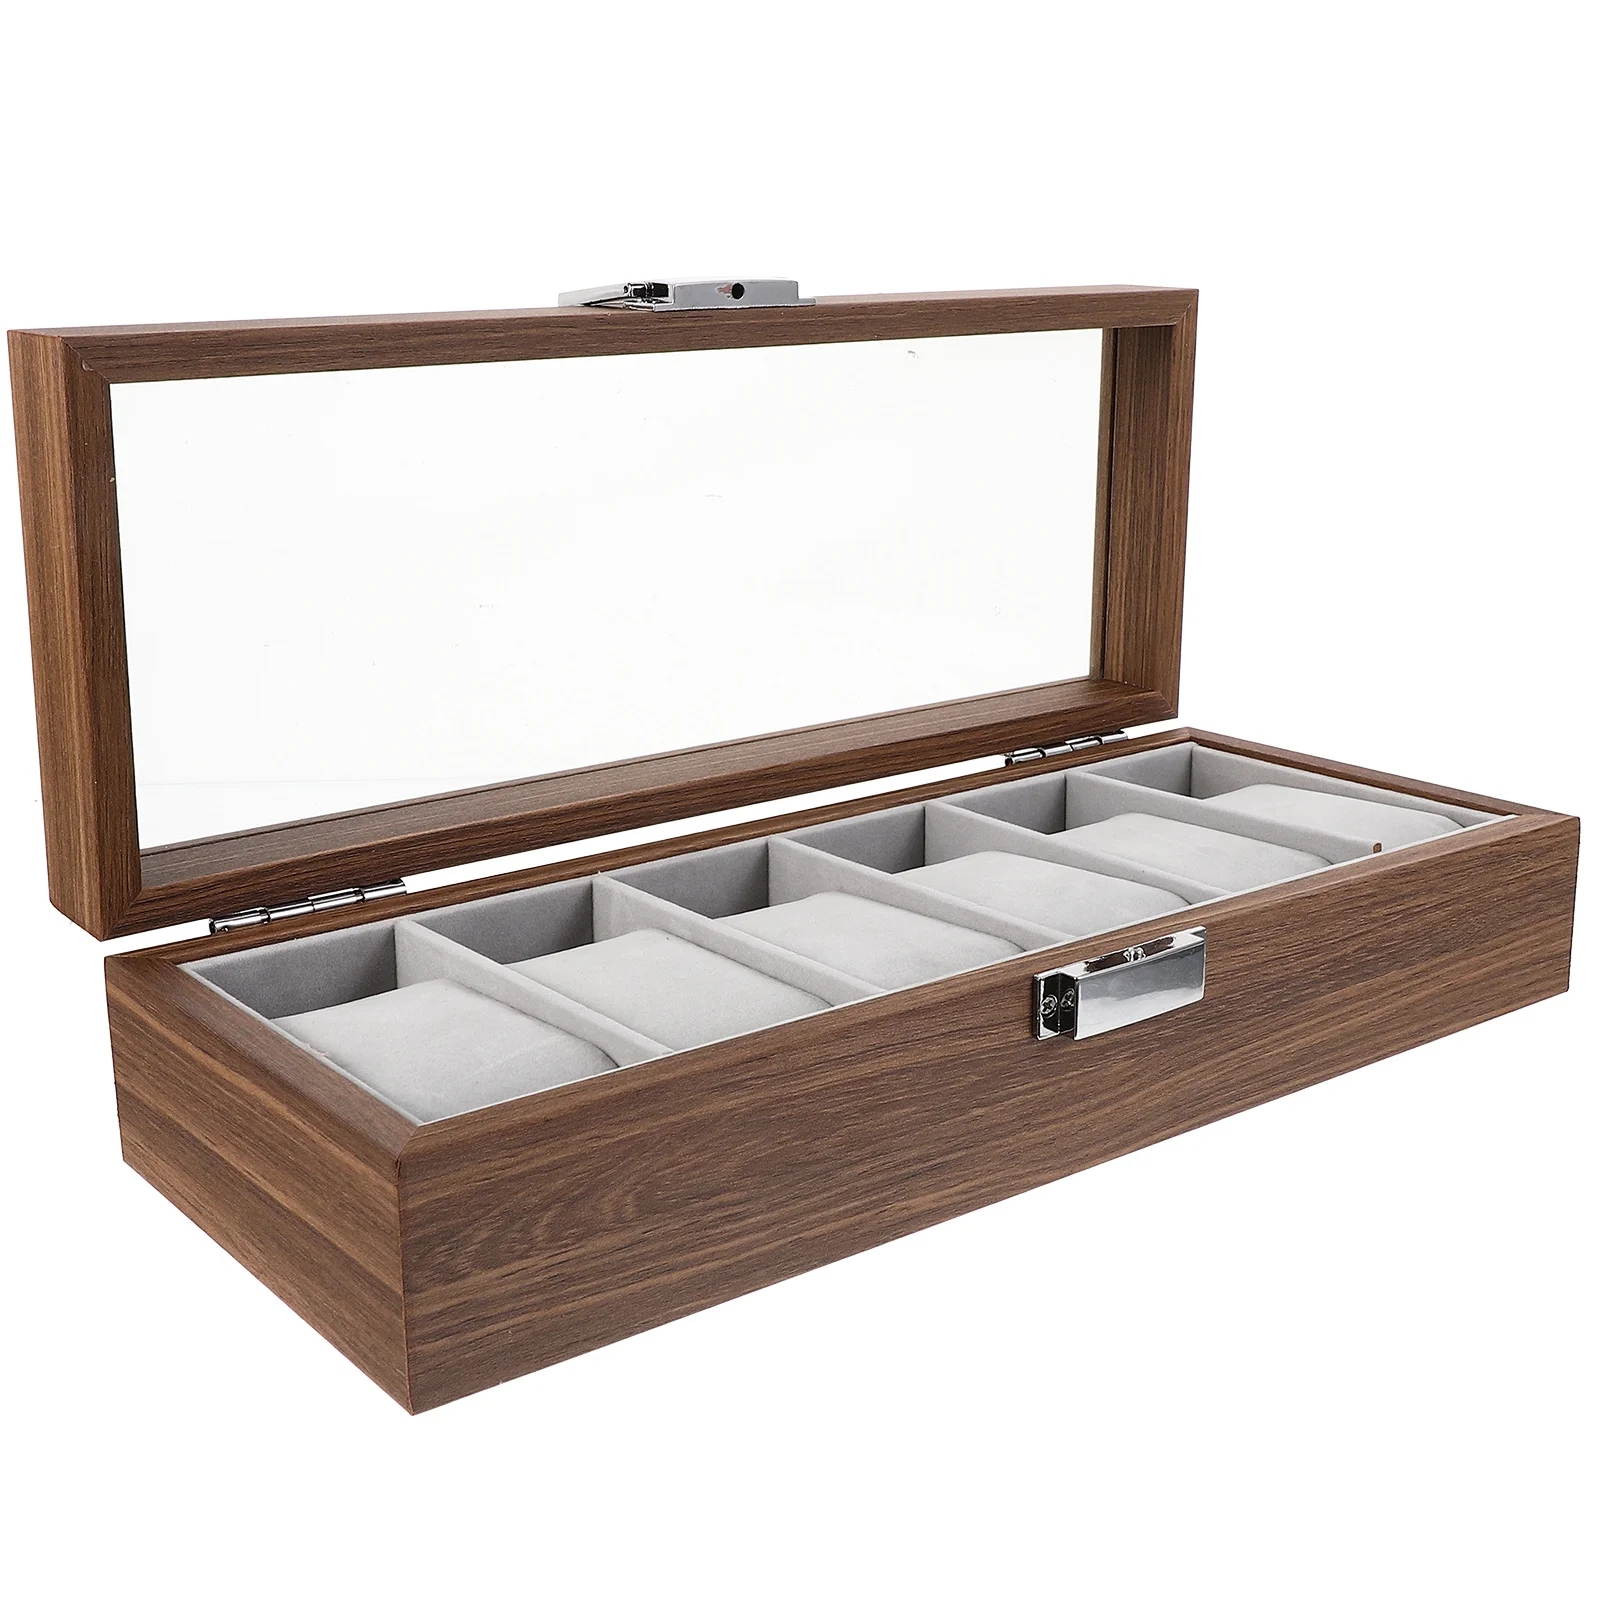 

Watch Display Box Outdoor Jewelry Case Carrier Organizer Seco Gray Velvet Desktop Storage Travel Decorative Holder Roll